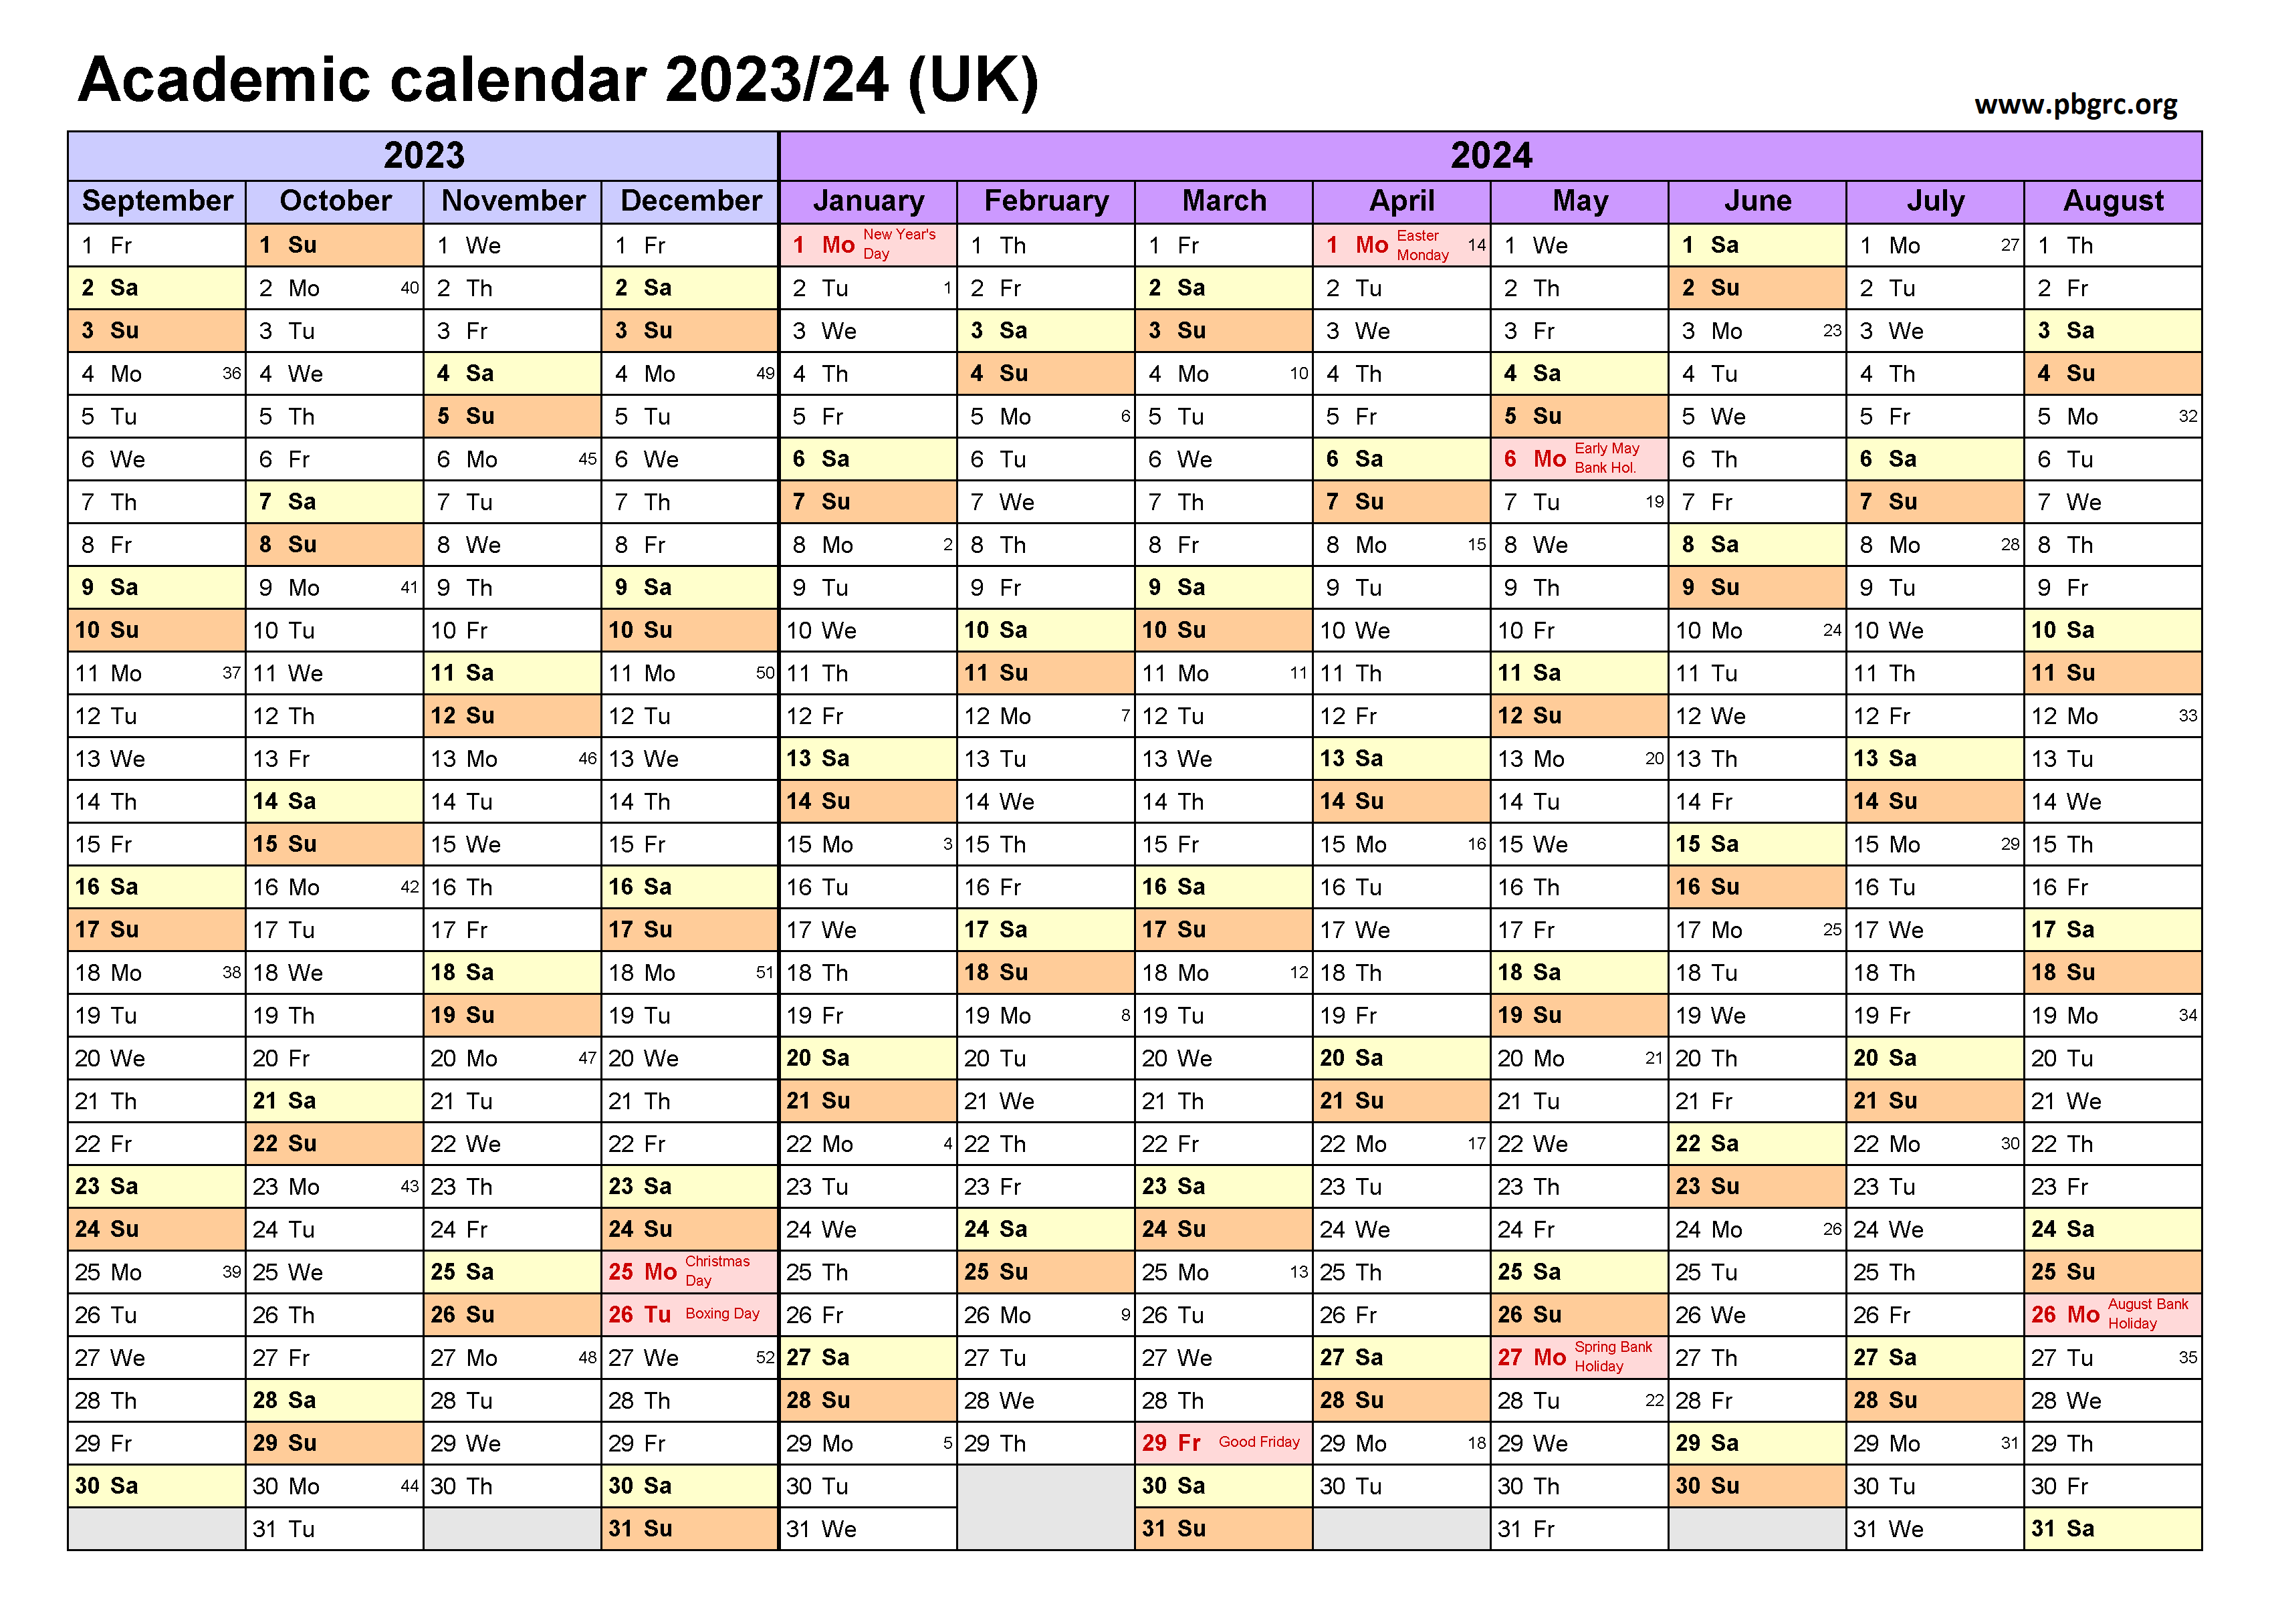 Academic Calendar 2023 to 2024 Templates